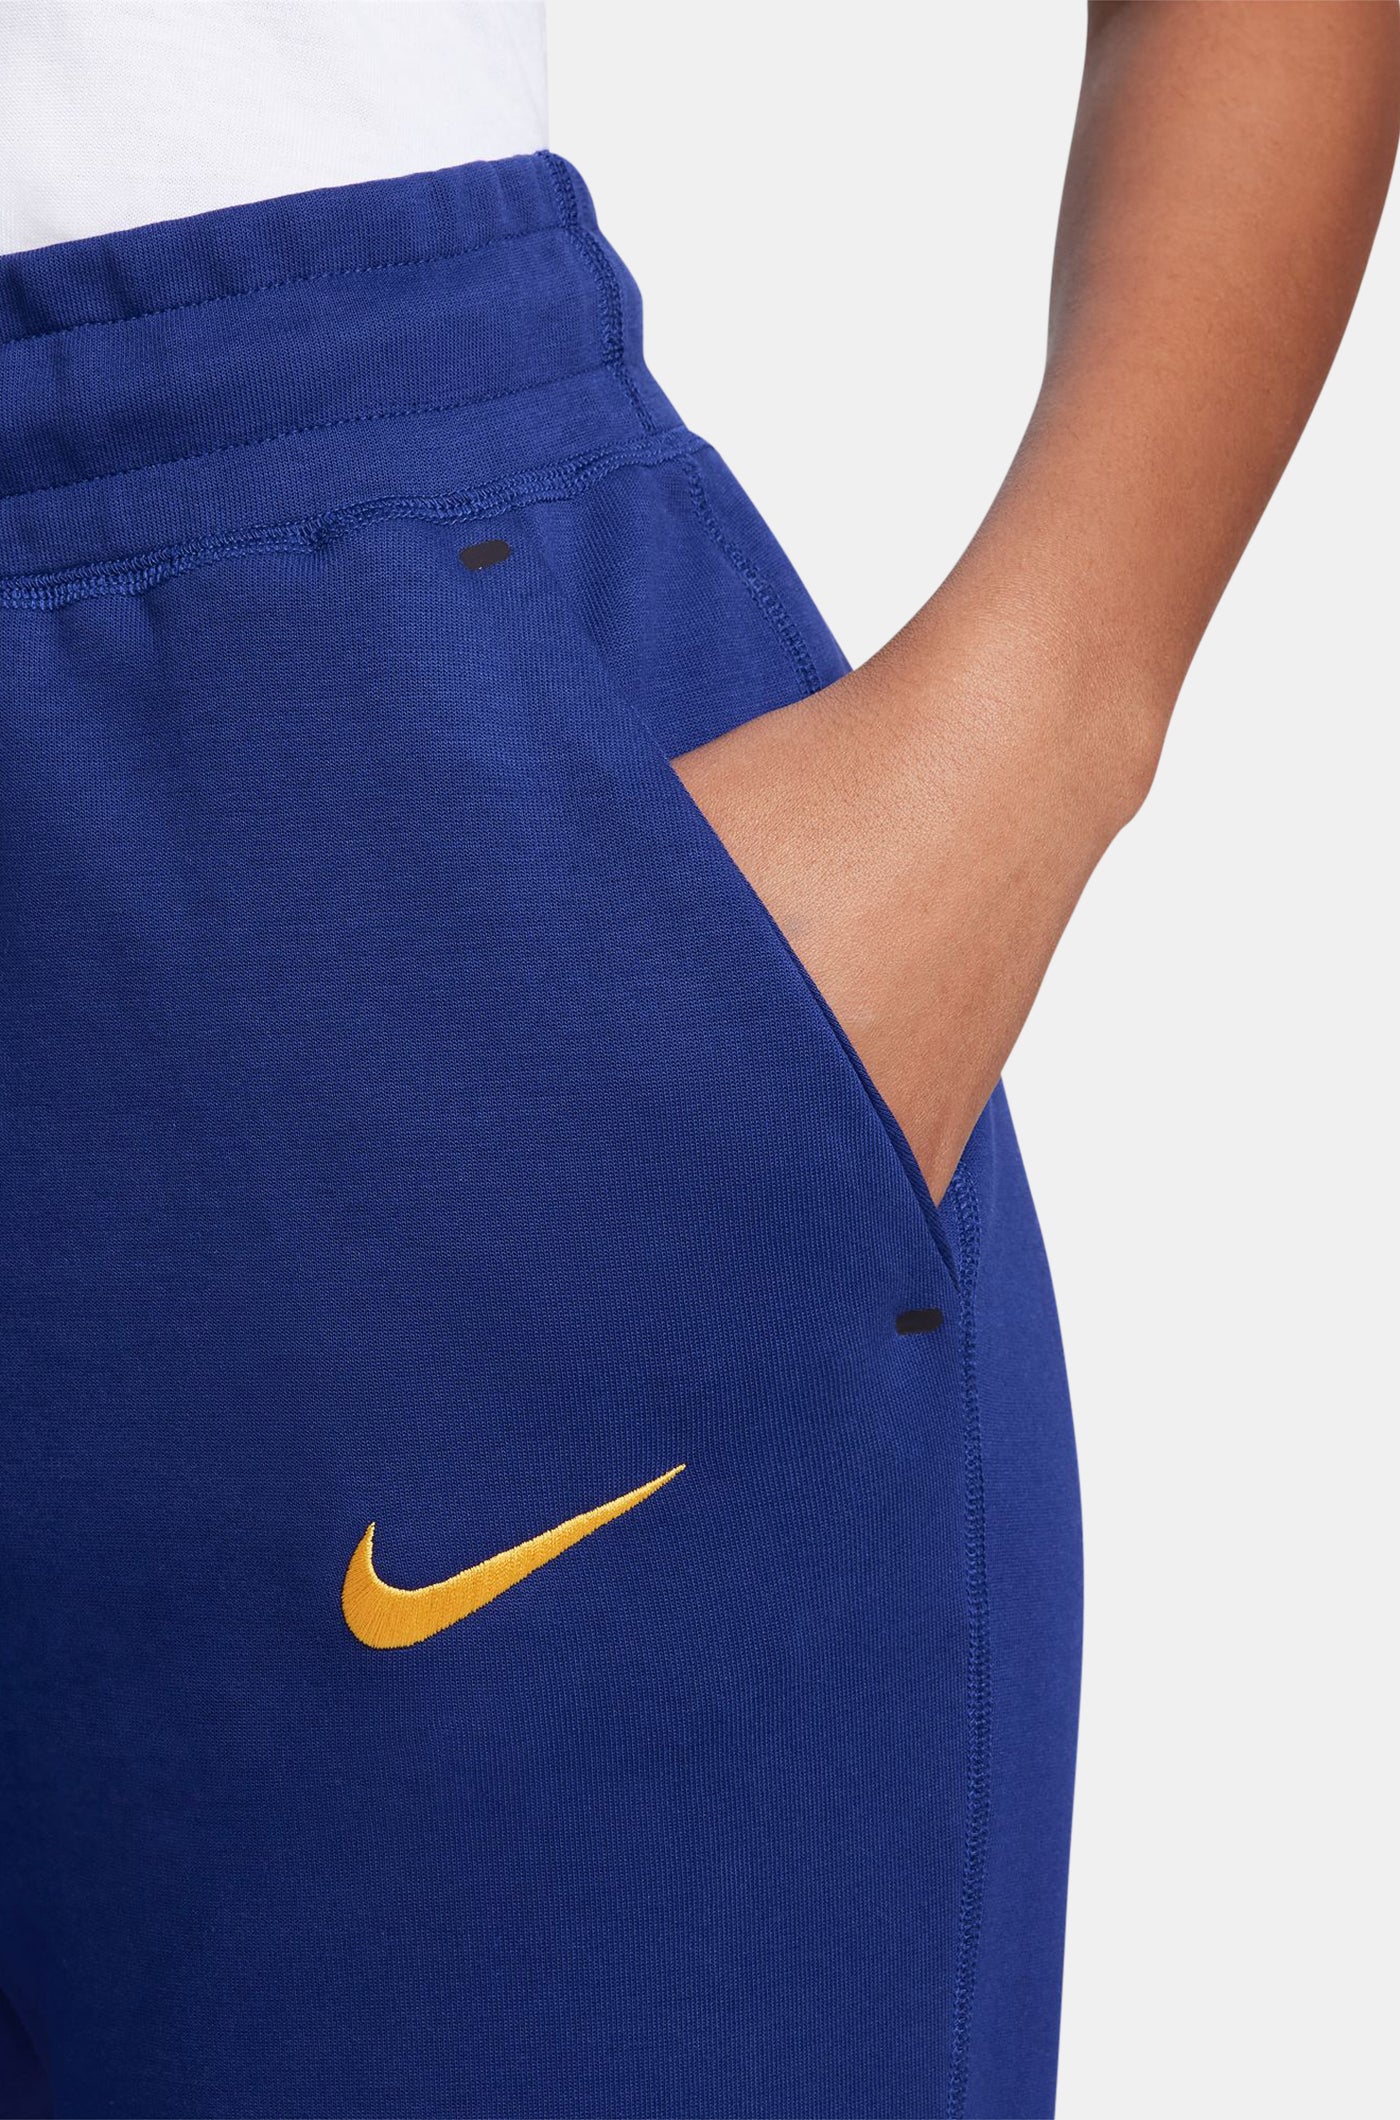 Pantalón tech azul Barça Nike - Mujer